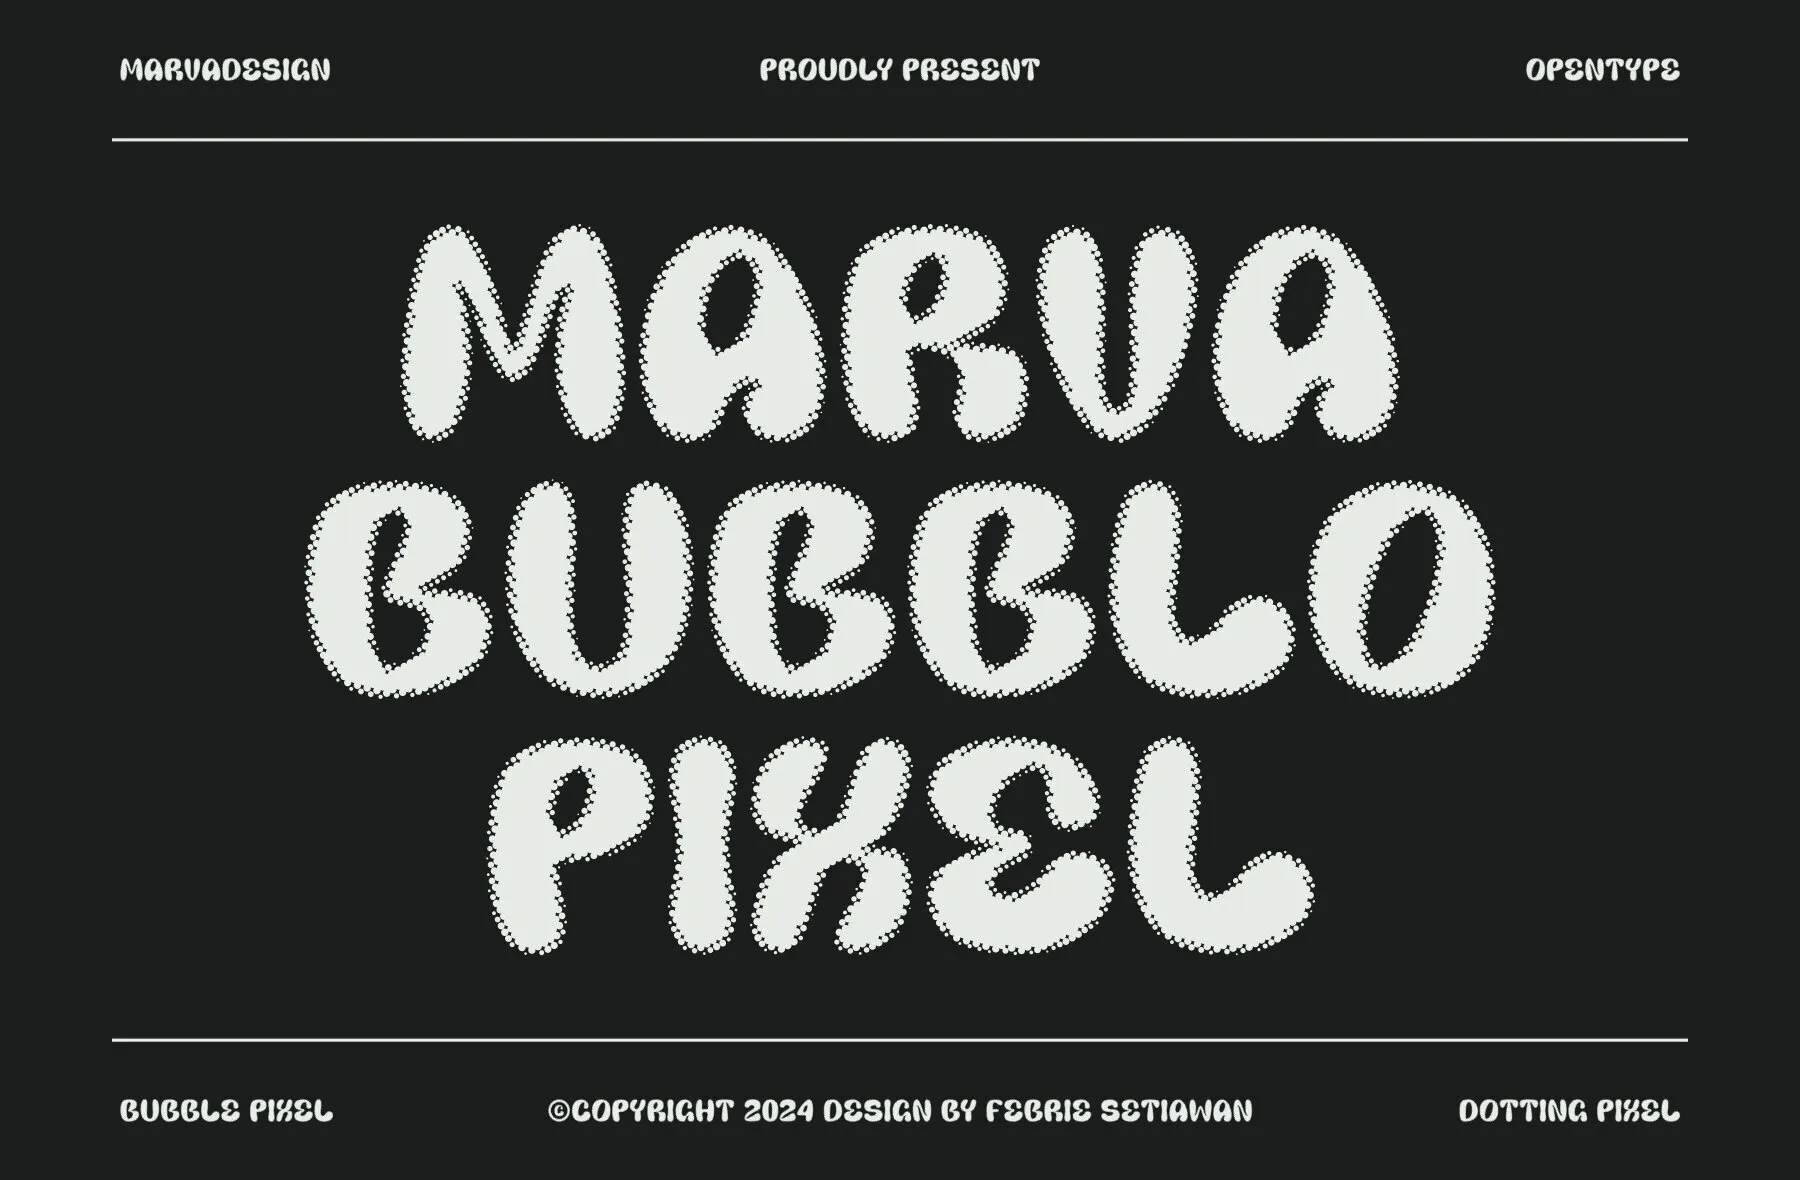 Marva Bubblo Pixel